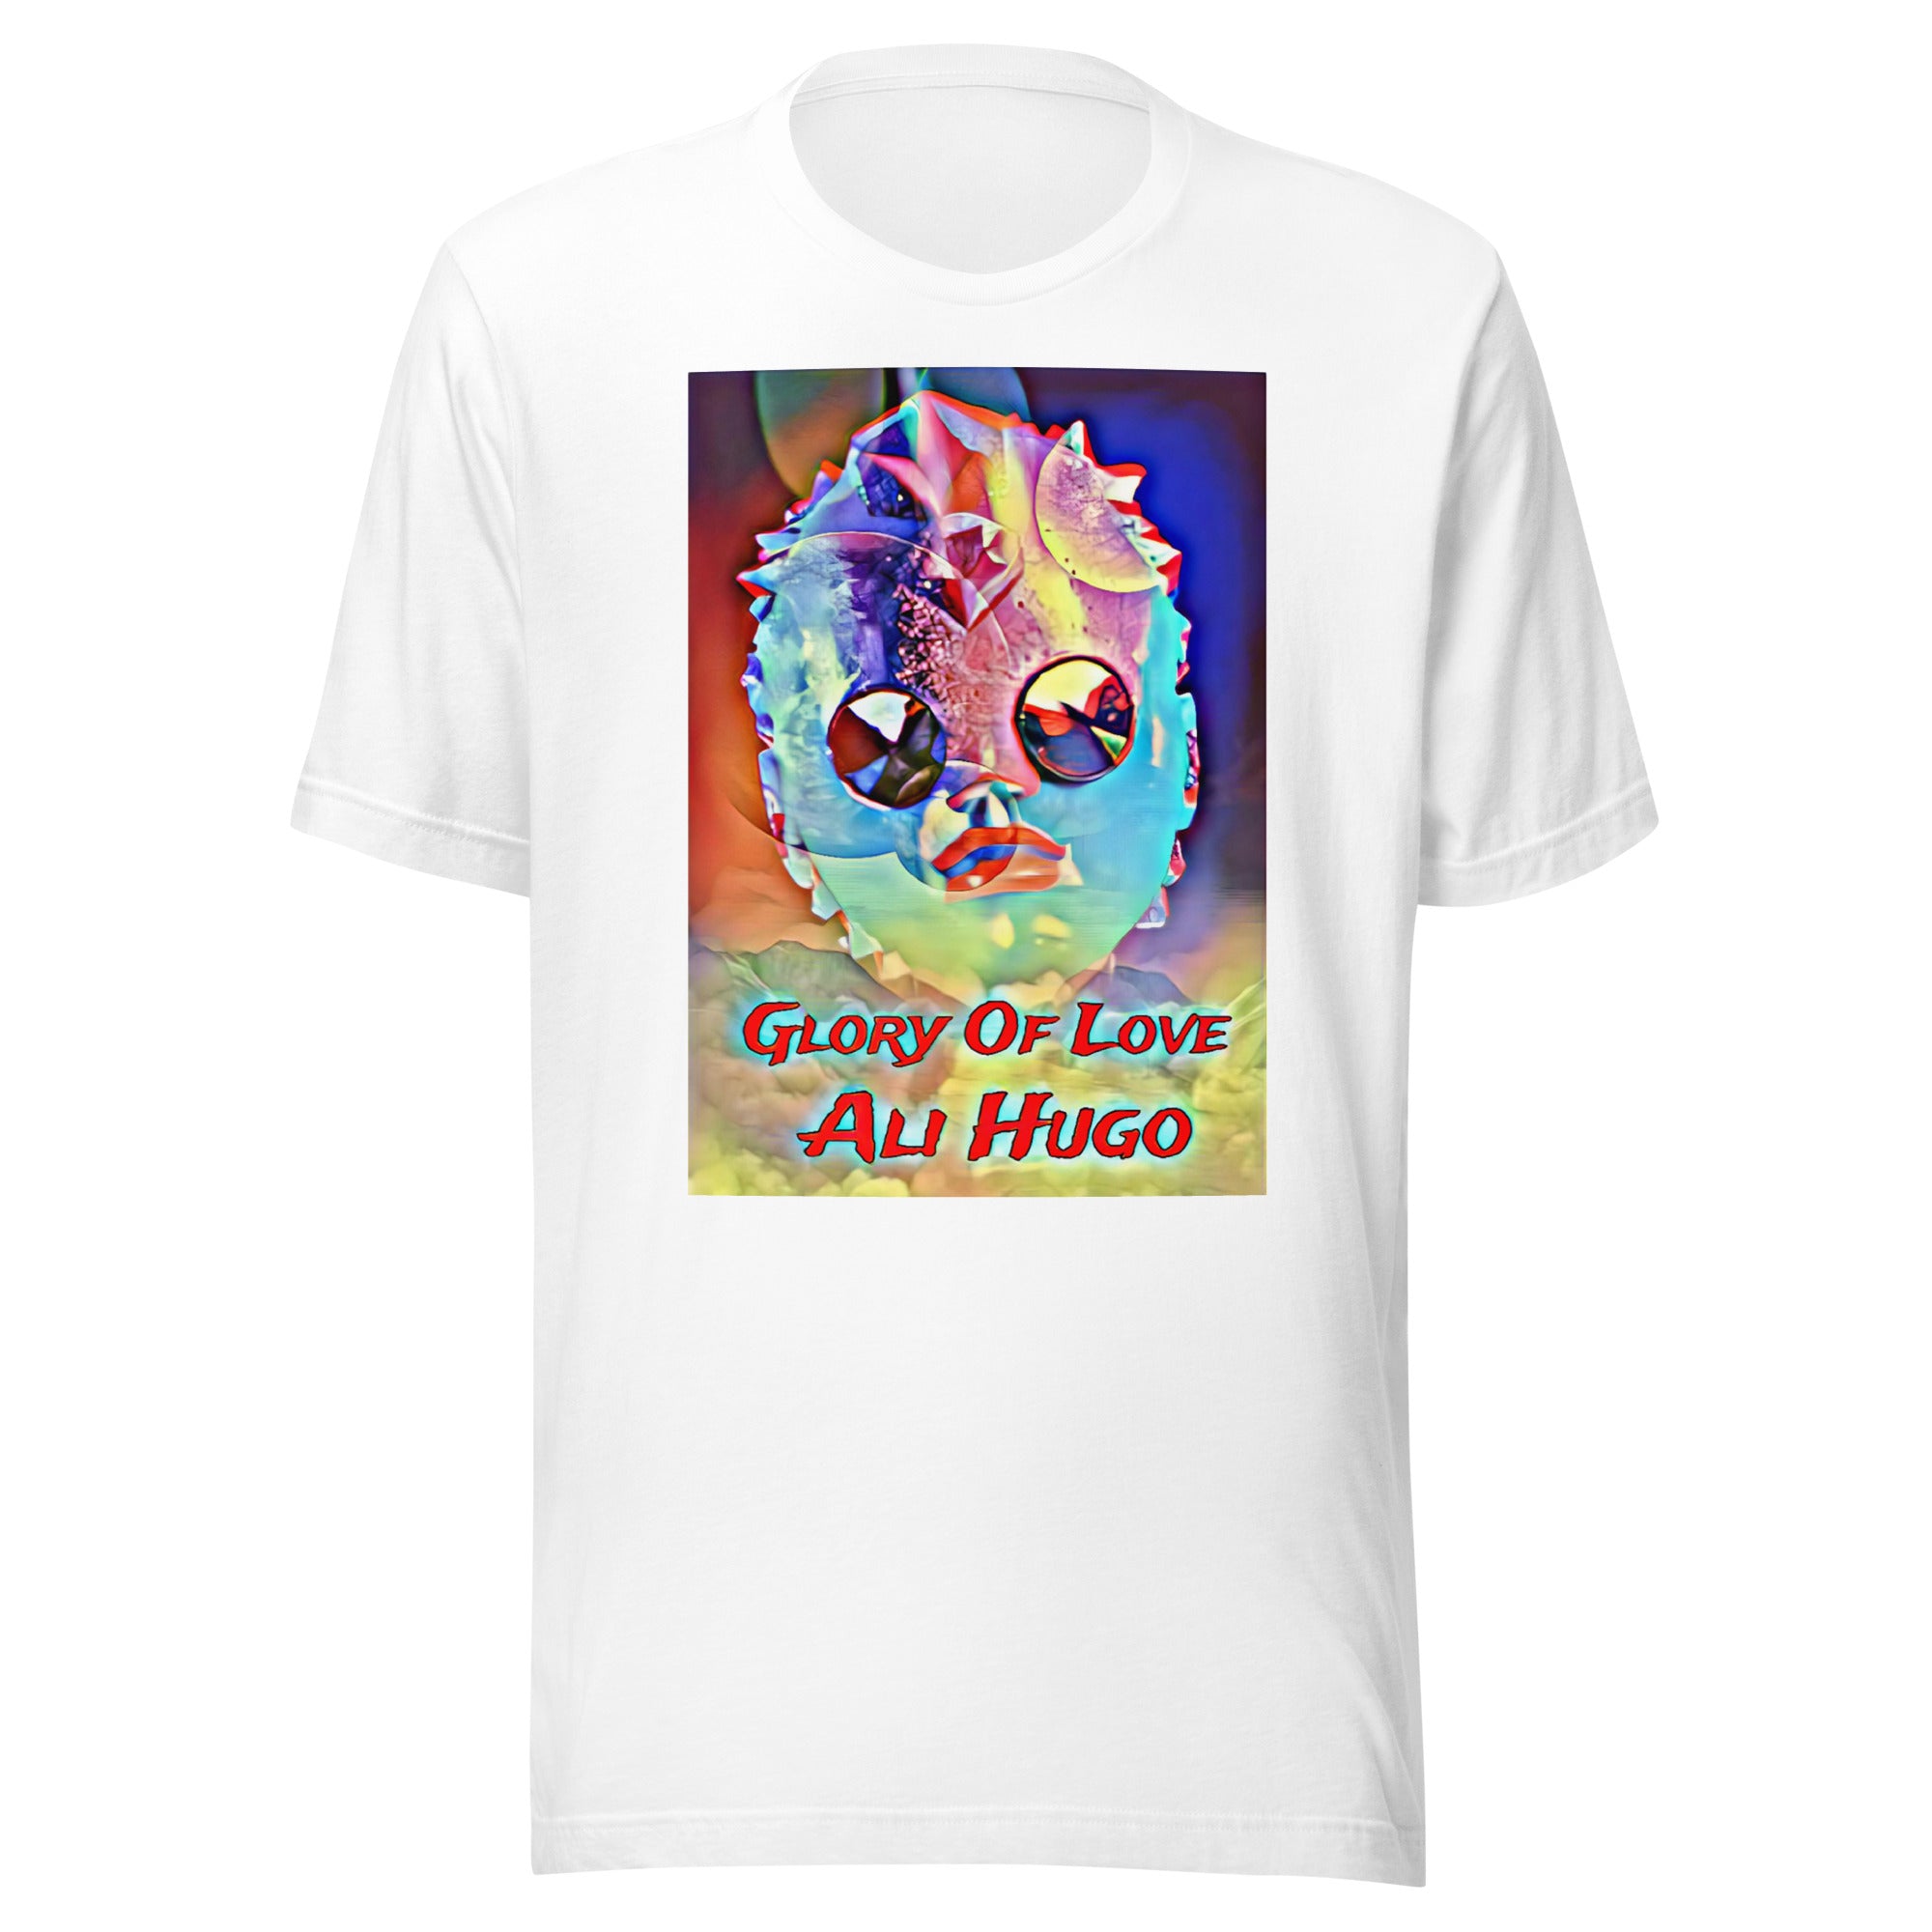 Ali Hugo - "Glory Of Love" - Unisex t-shirt